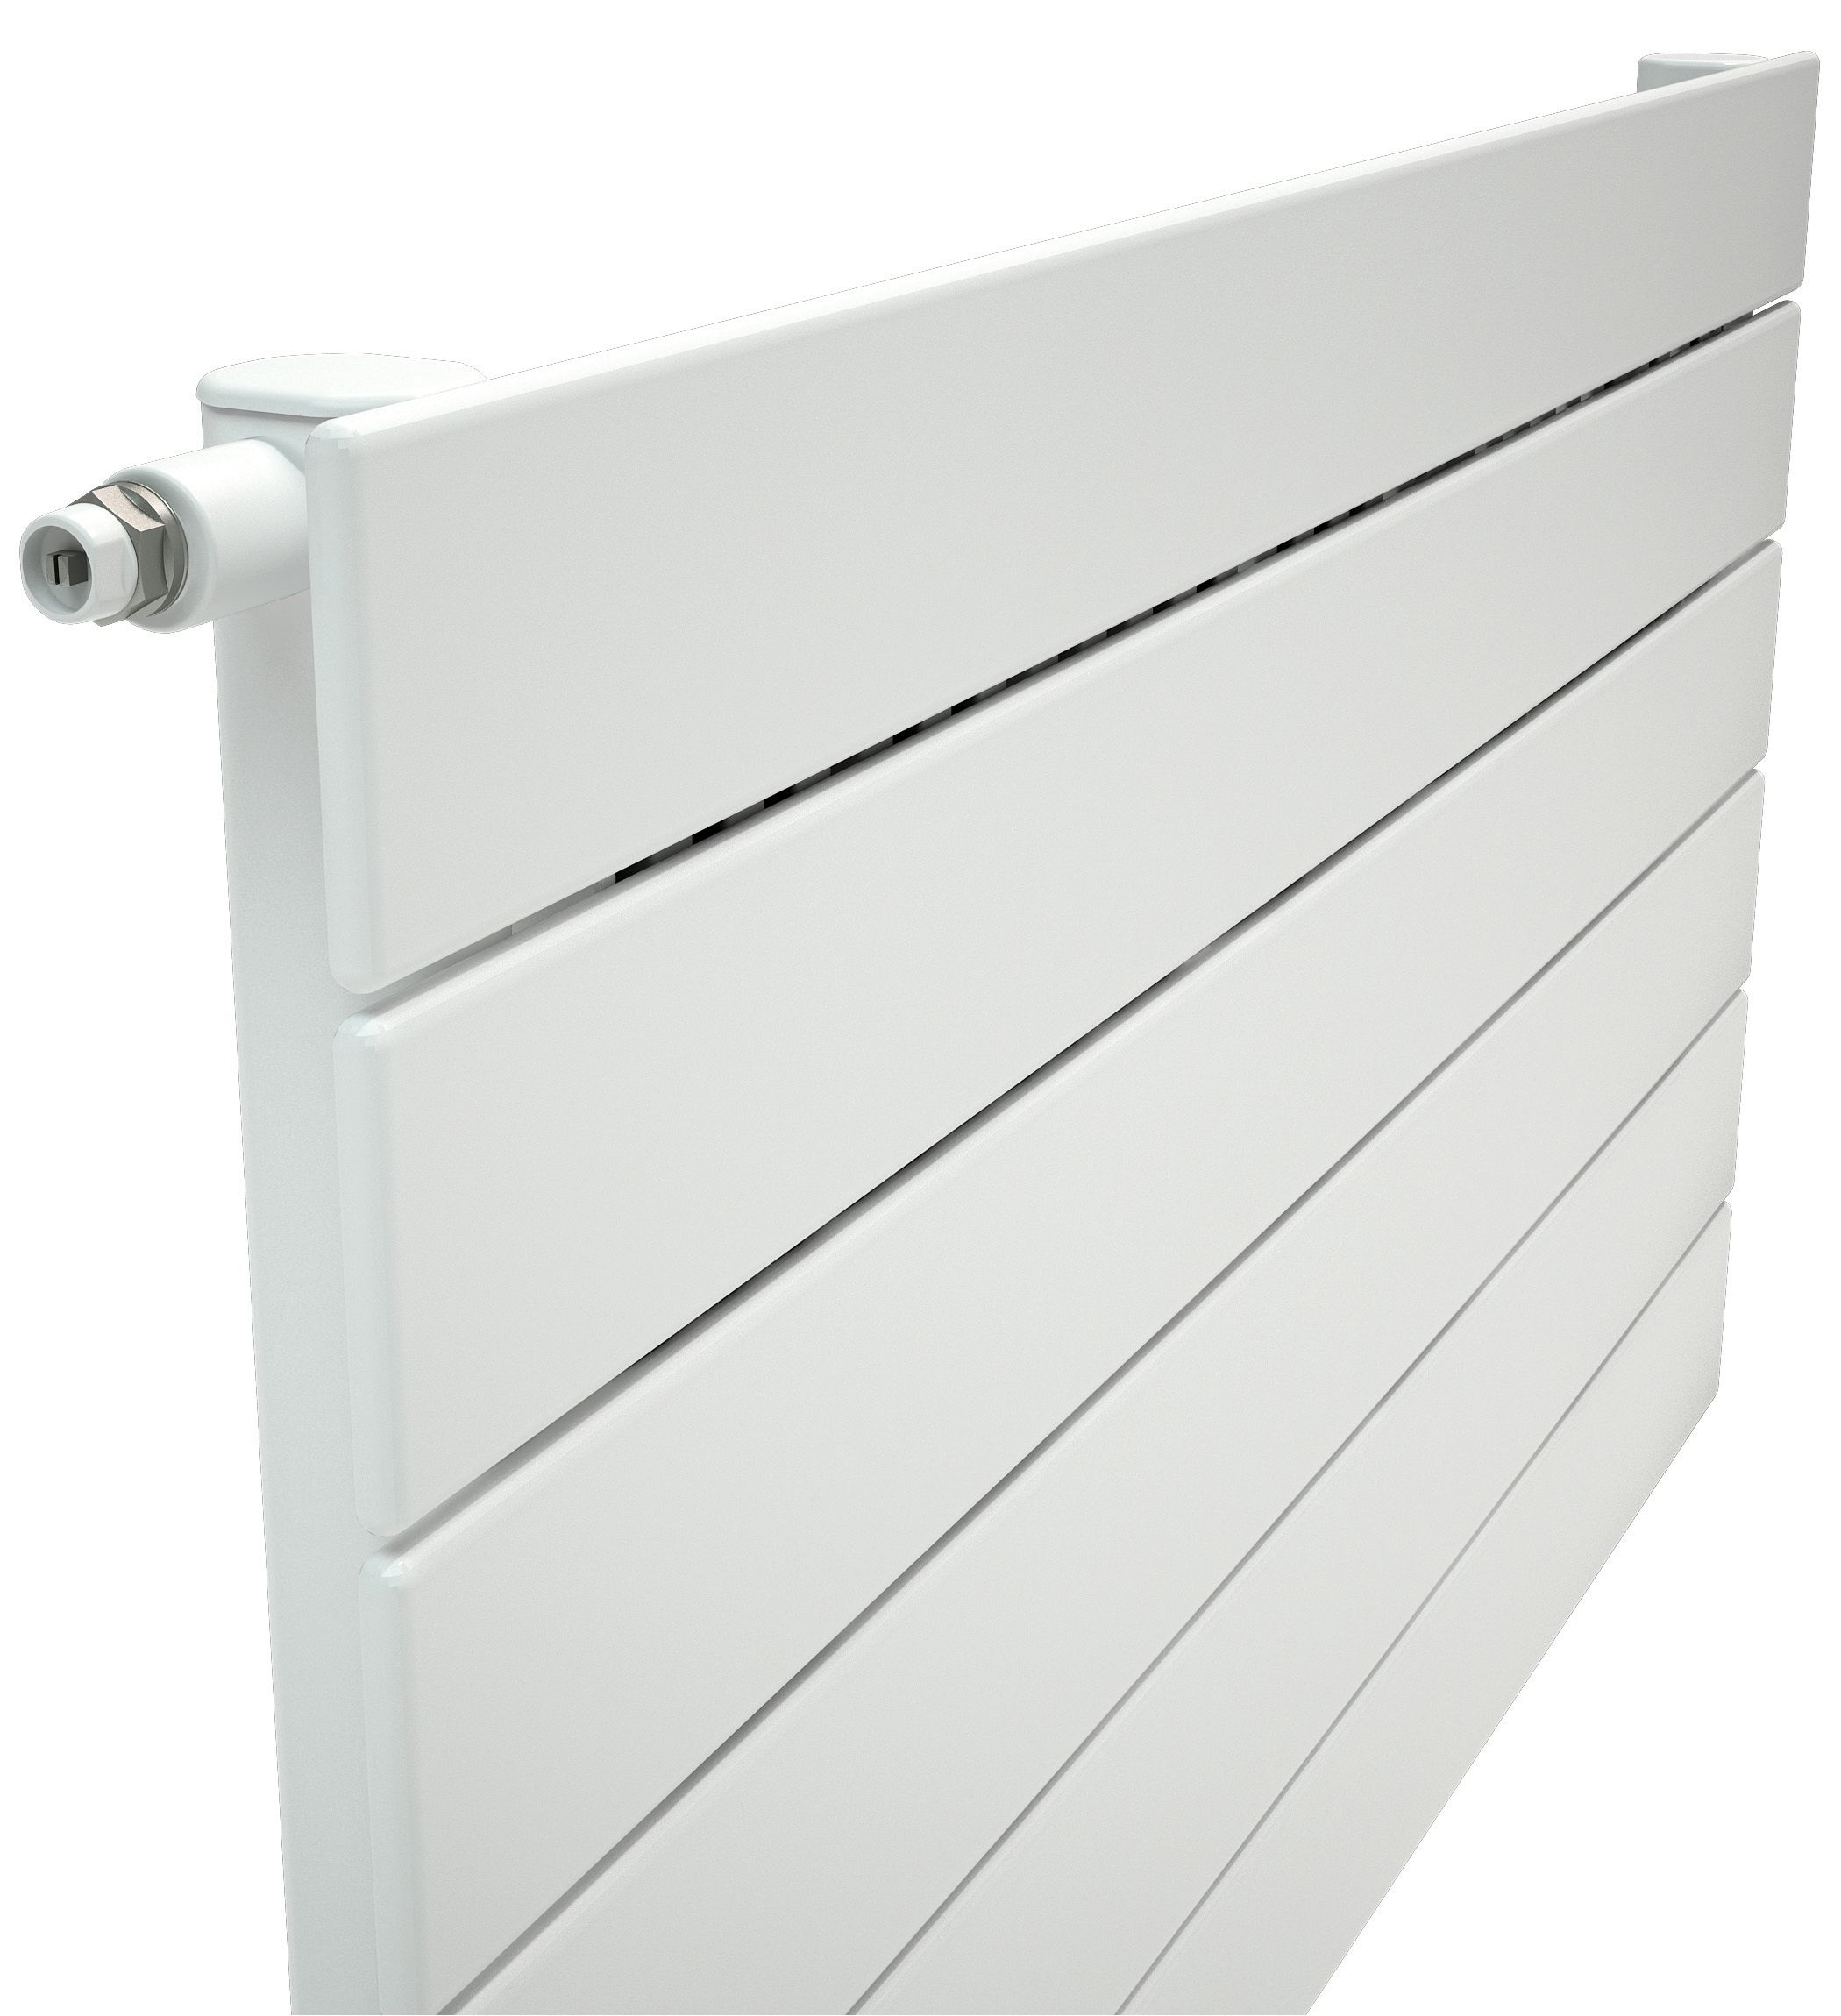 Image of Henrad Verona Single Panel Designer Radiator - White 592 x 1000 mm